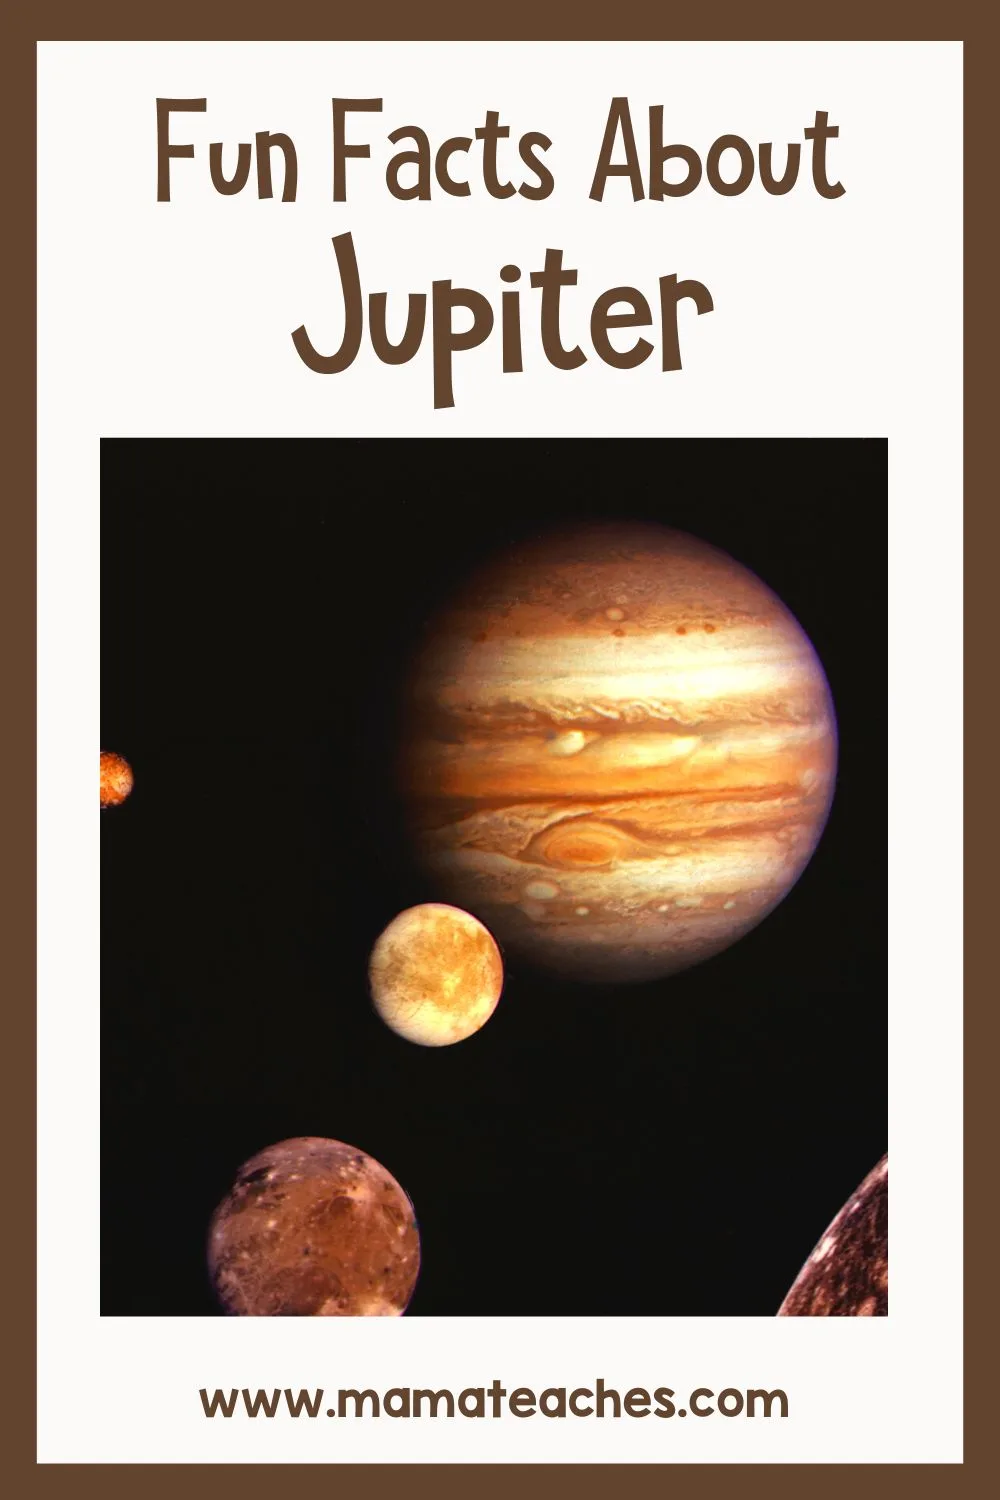 Fun Facts About Jupiter